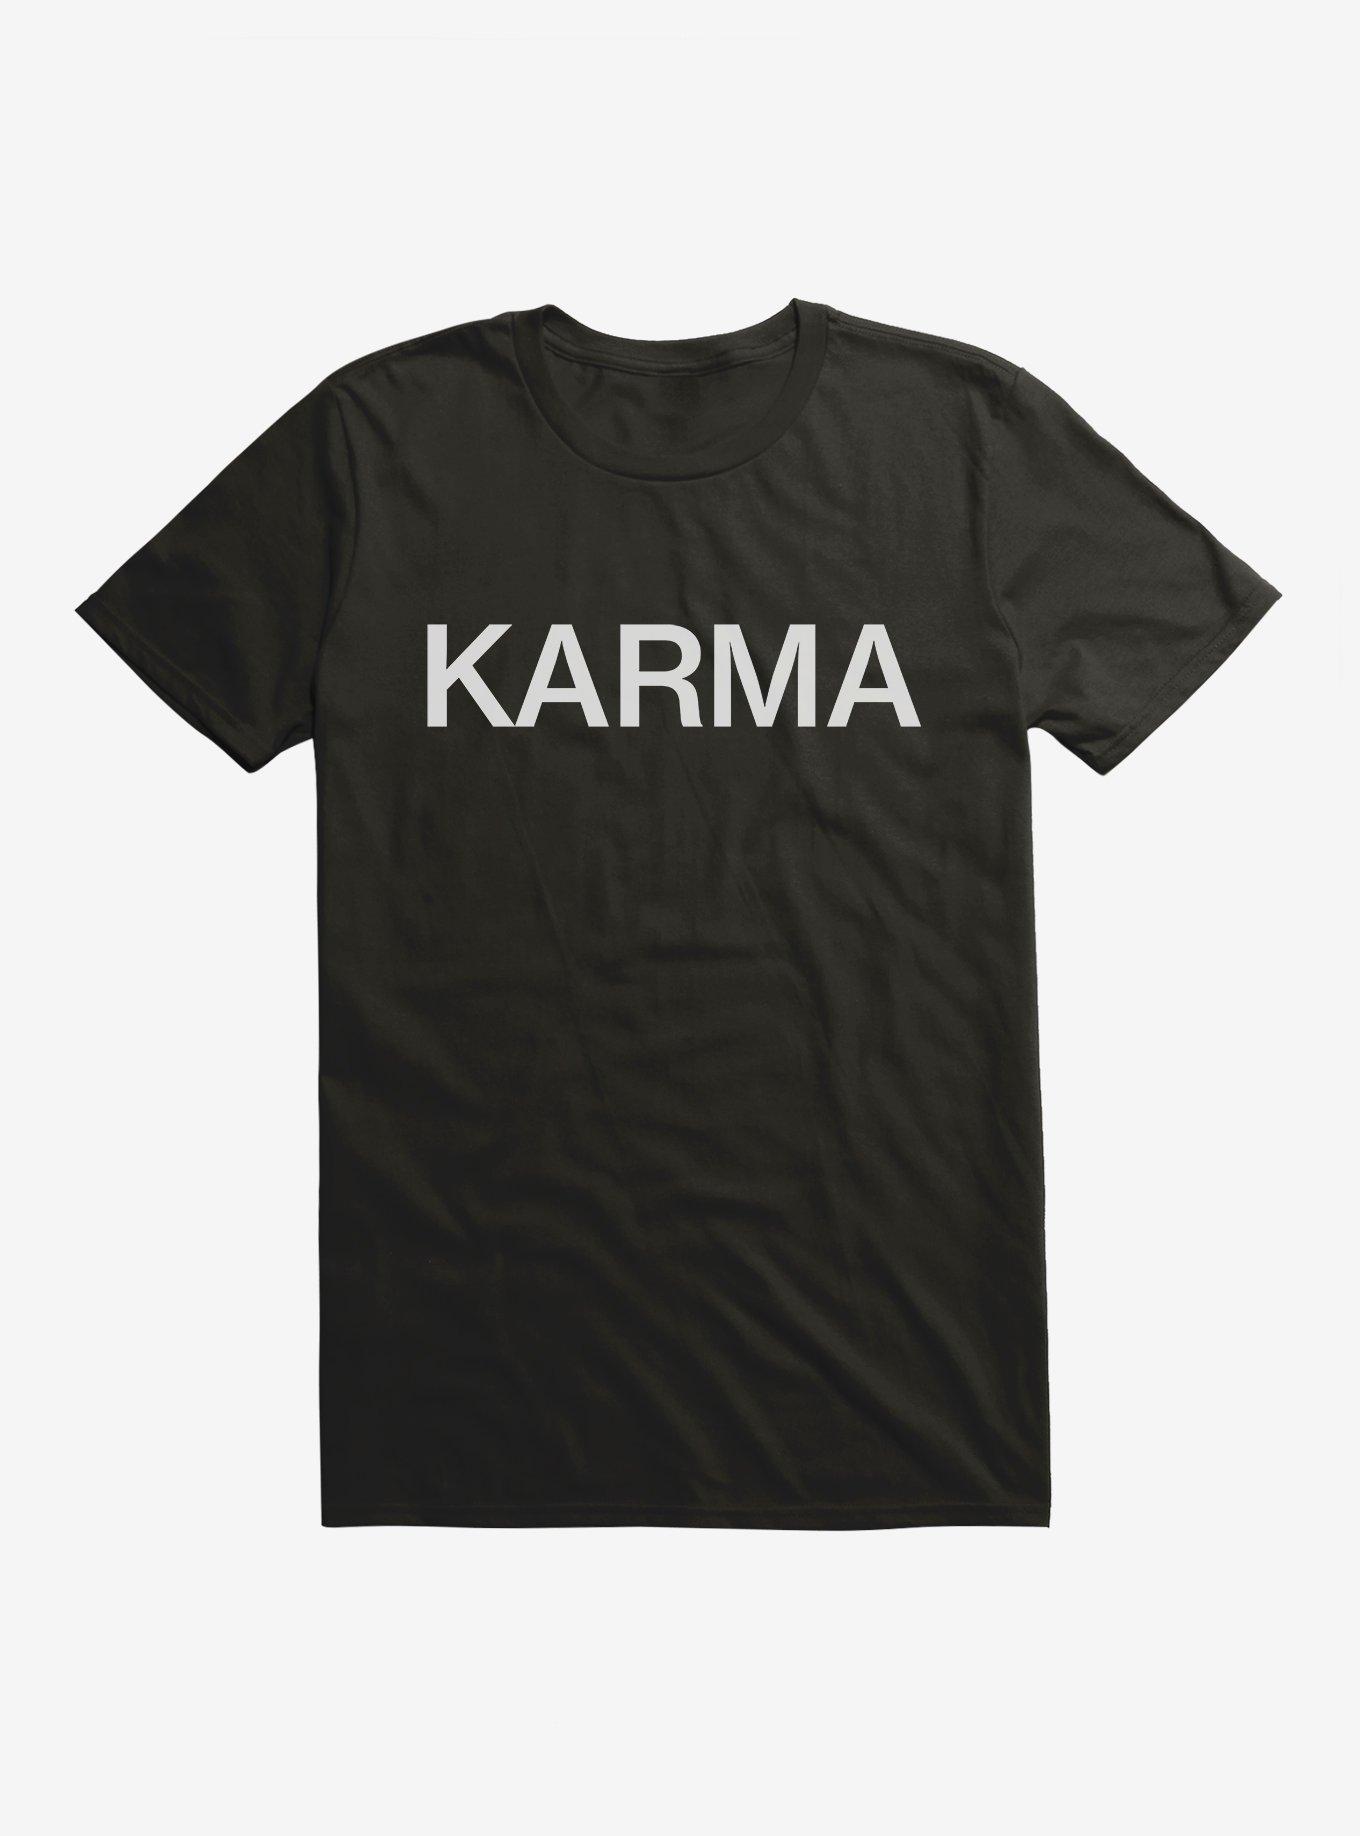 Karma Text T-Shirt, , hi-res